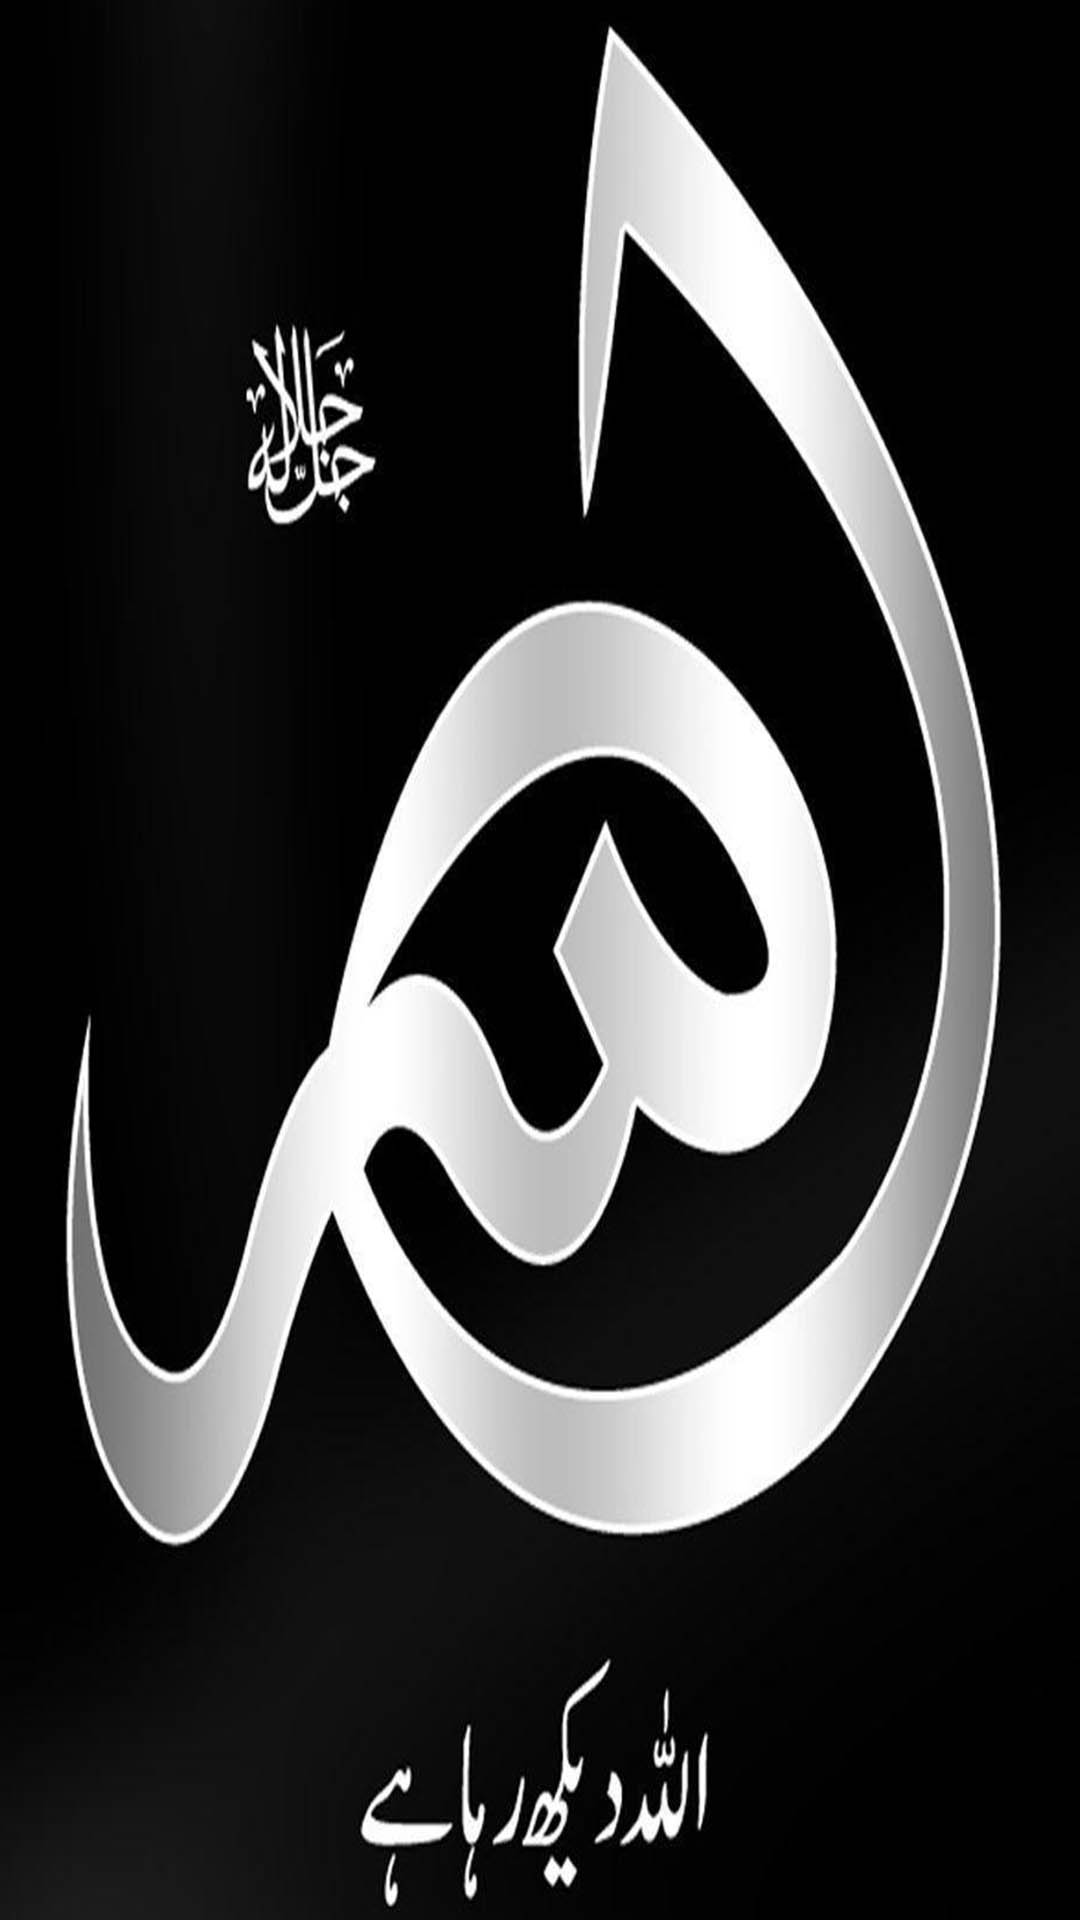 Islamic Wallpaper Allah Background Oneplus 7 8 Mi 9 - Oneplus 7 1080x1920 Allah - HD Wallpaper 